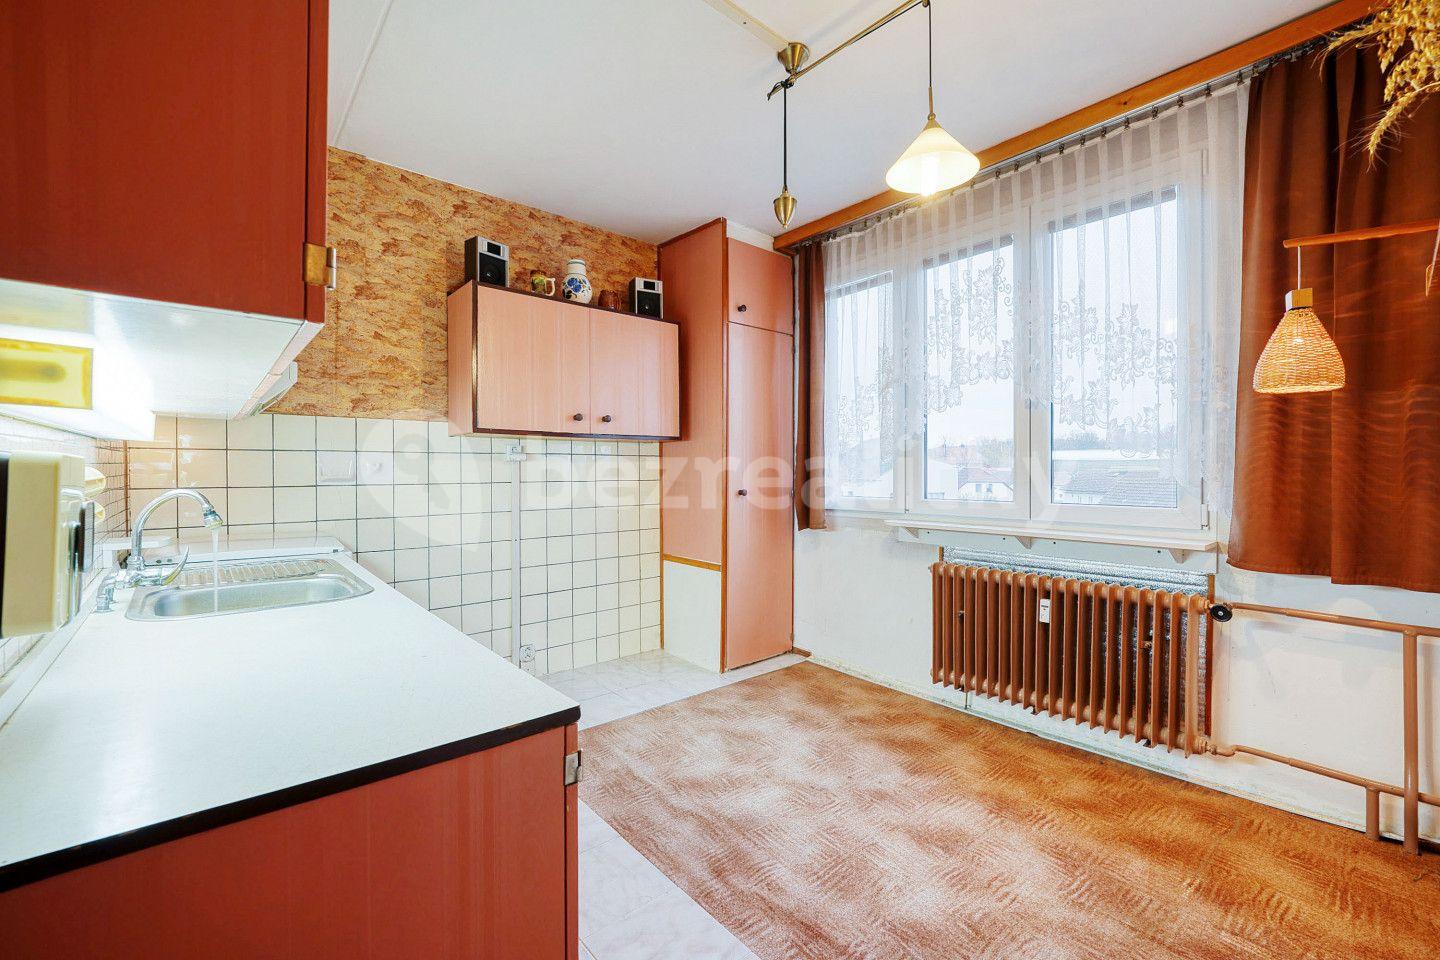 2 bedroom flat for sale, 75 m², Jankovského, Staňkov, Plzeňský Region